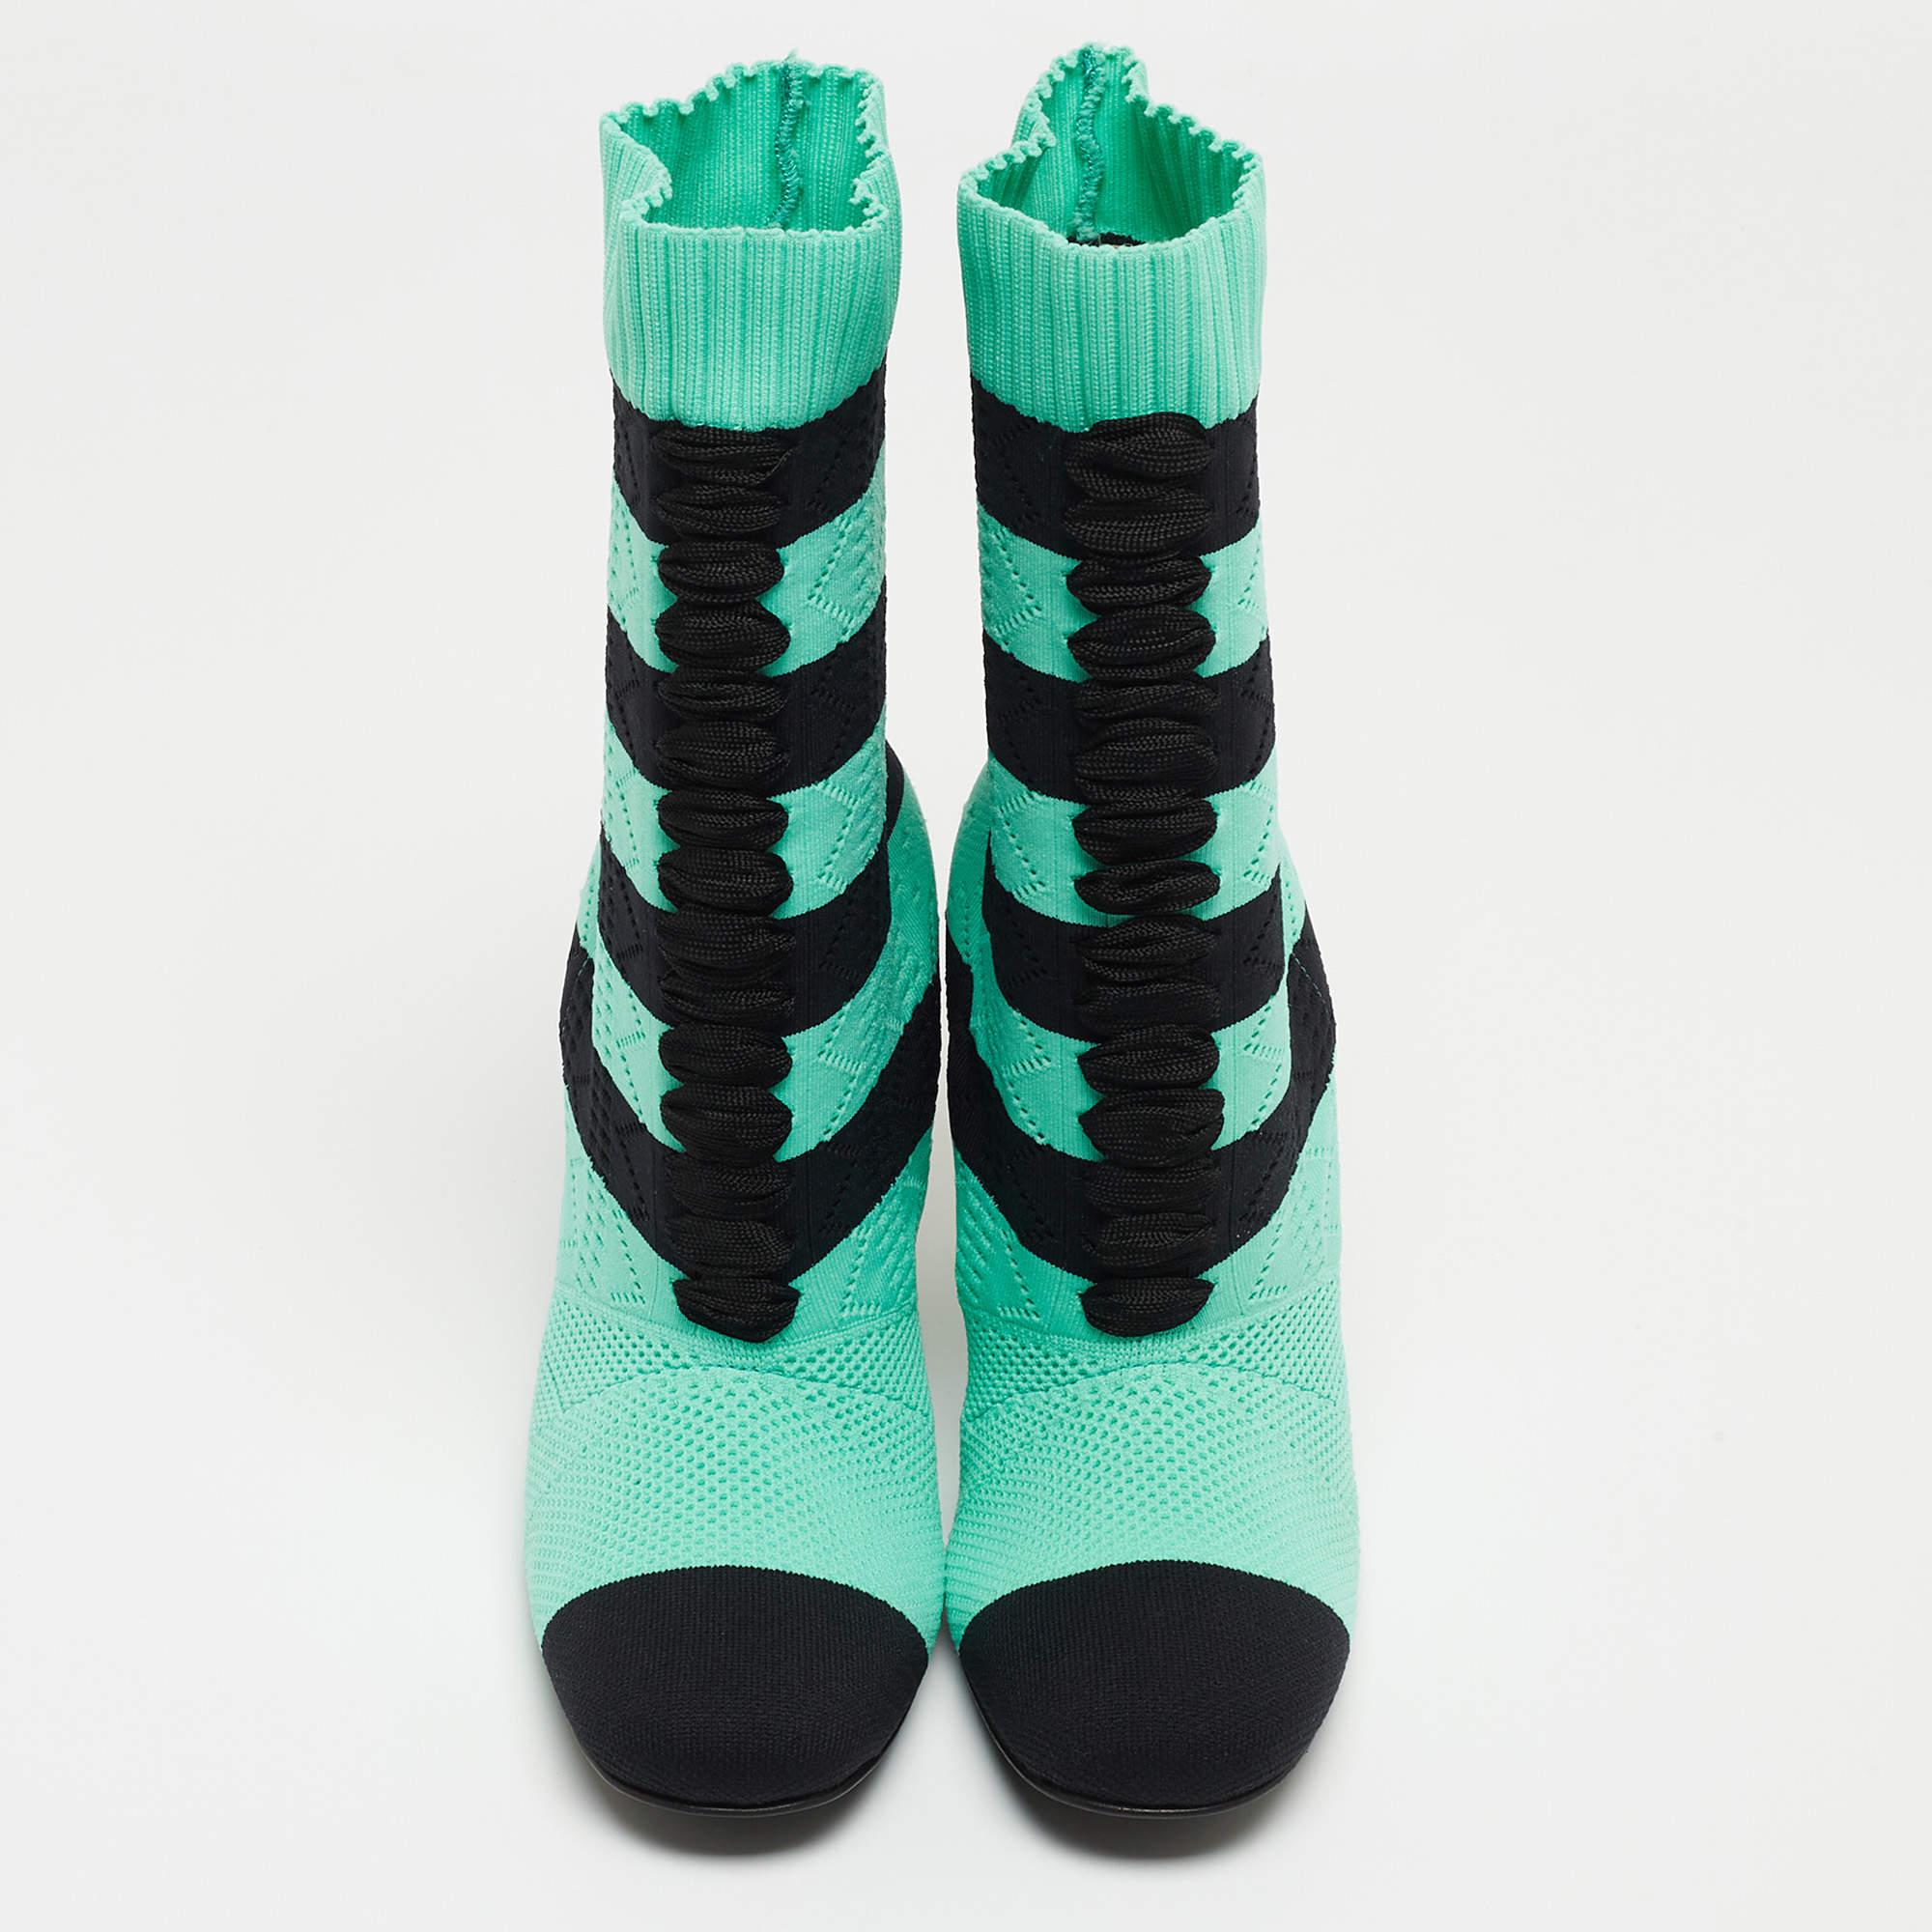 Louis Vuitton Blue/Black Knit Fabric Sock Boots Size 37 In New Condition For Sale In Dubai, Al Qouz 2